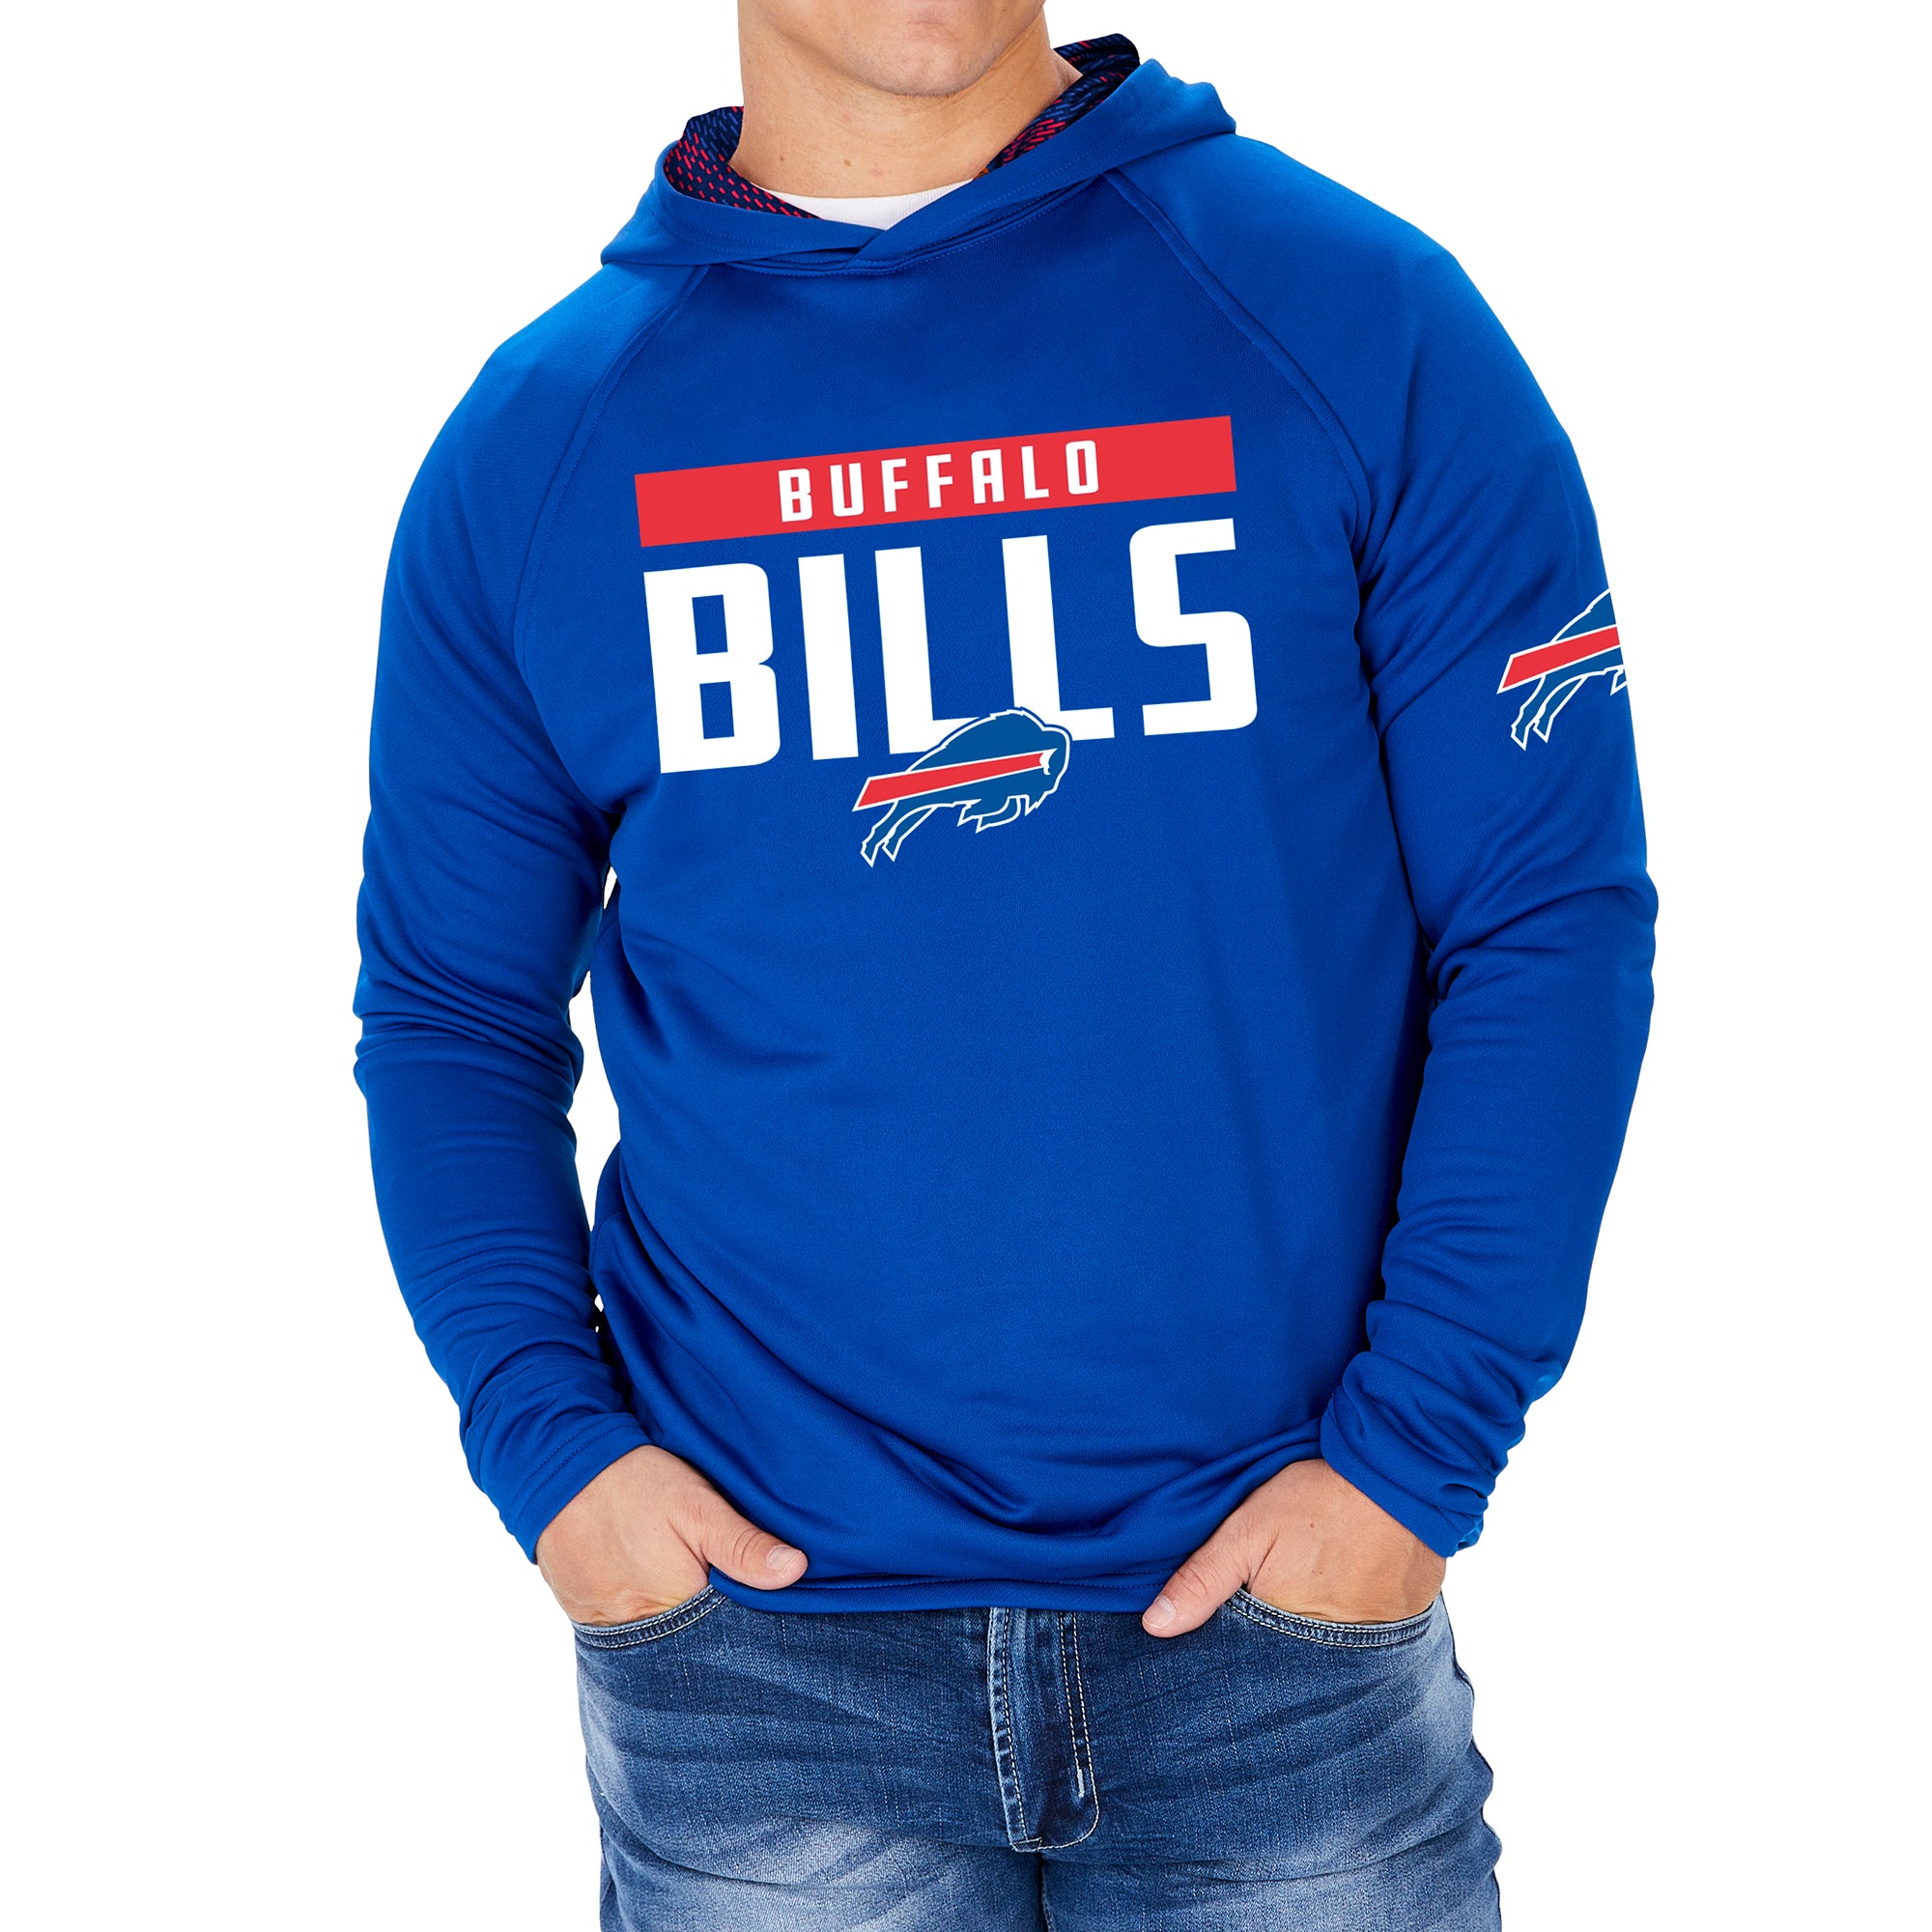 Zubaz Men's NFL Buffalo Bills Team Color Hoodie With Viper Print